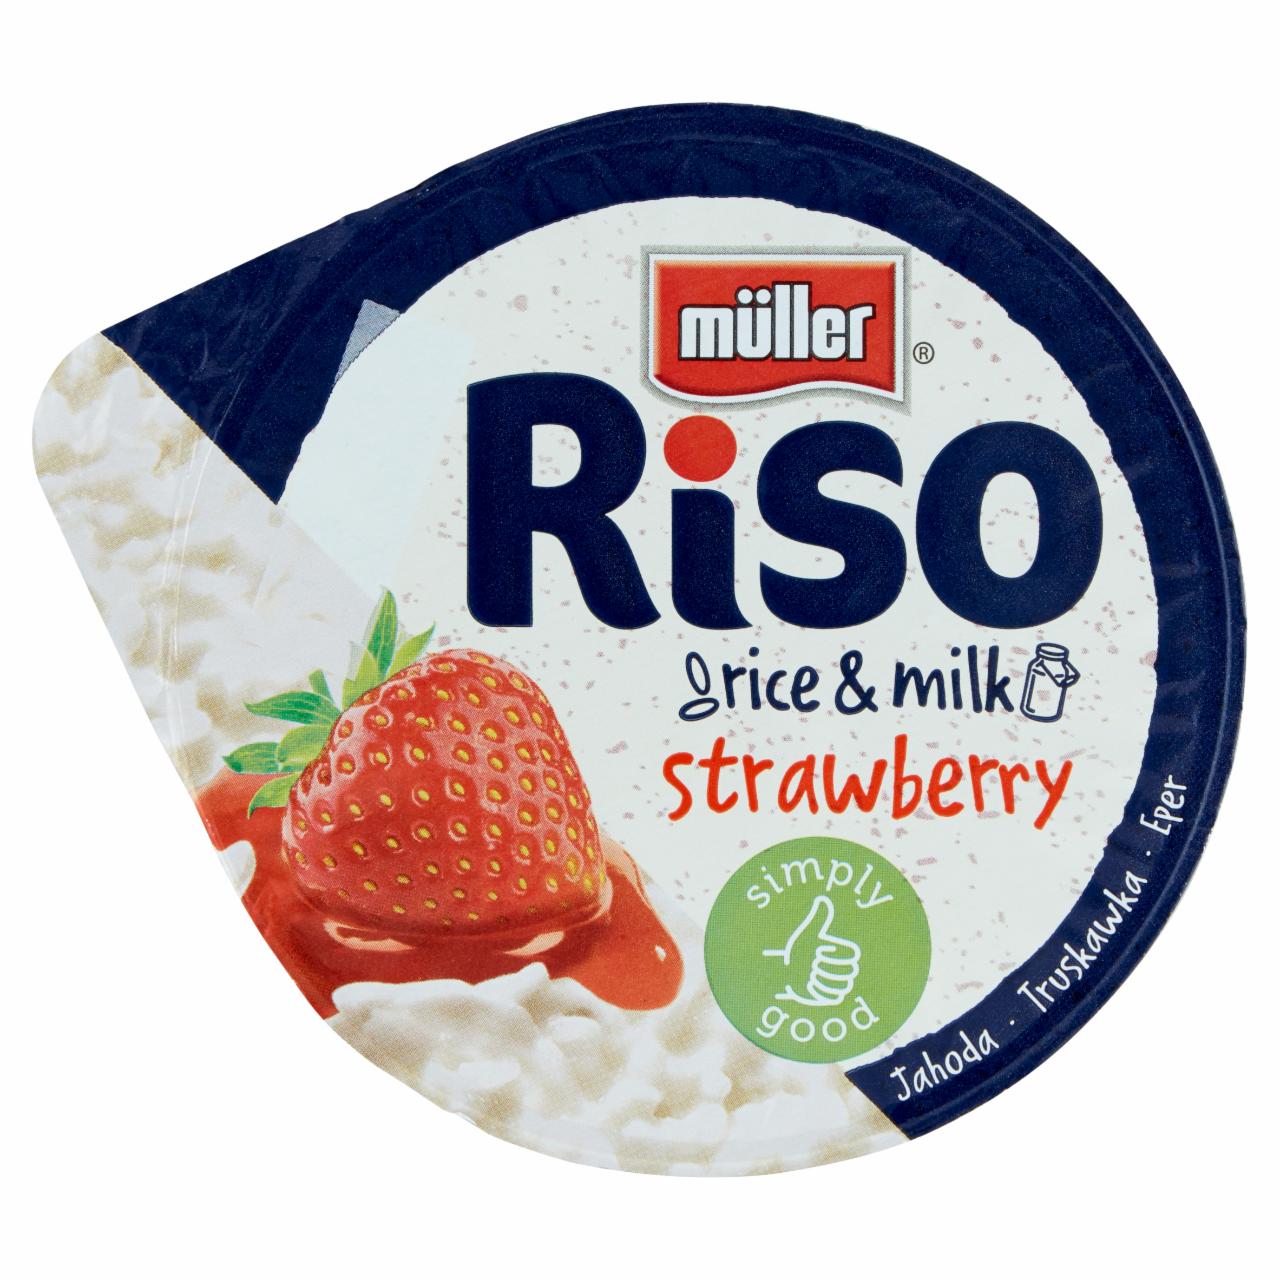 Fotografie - Riso rice & milk Strawberry Müller